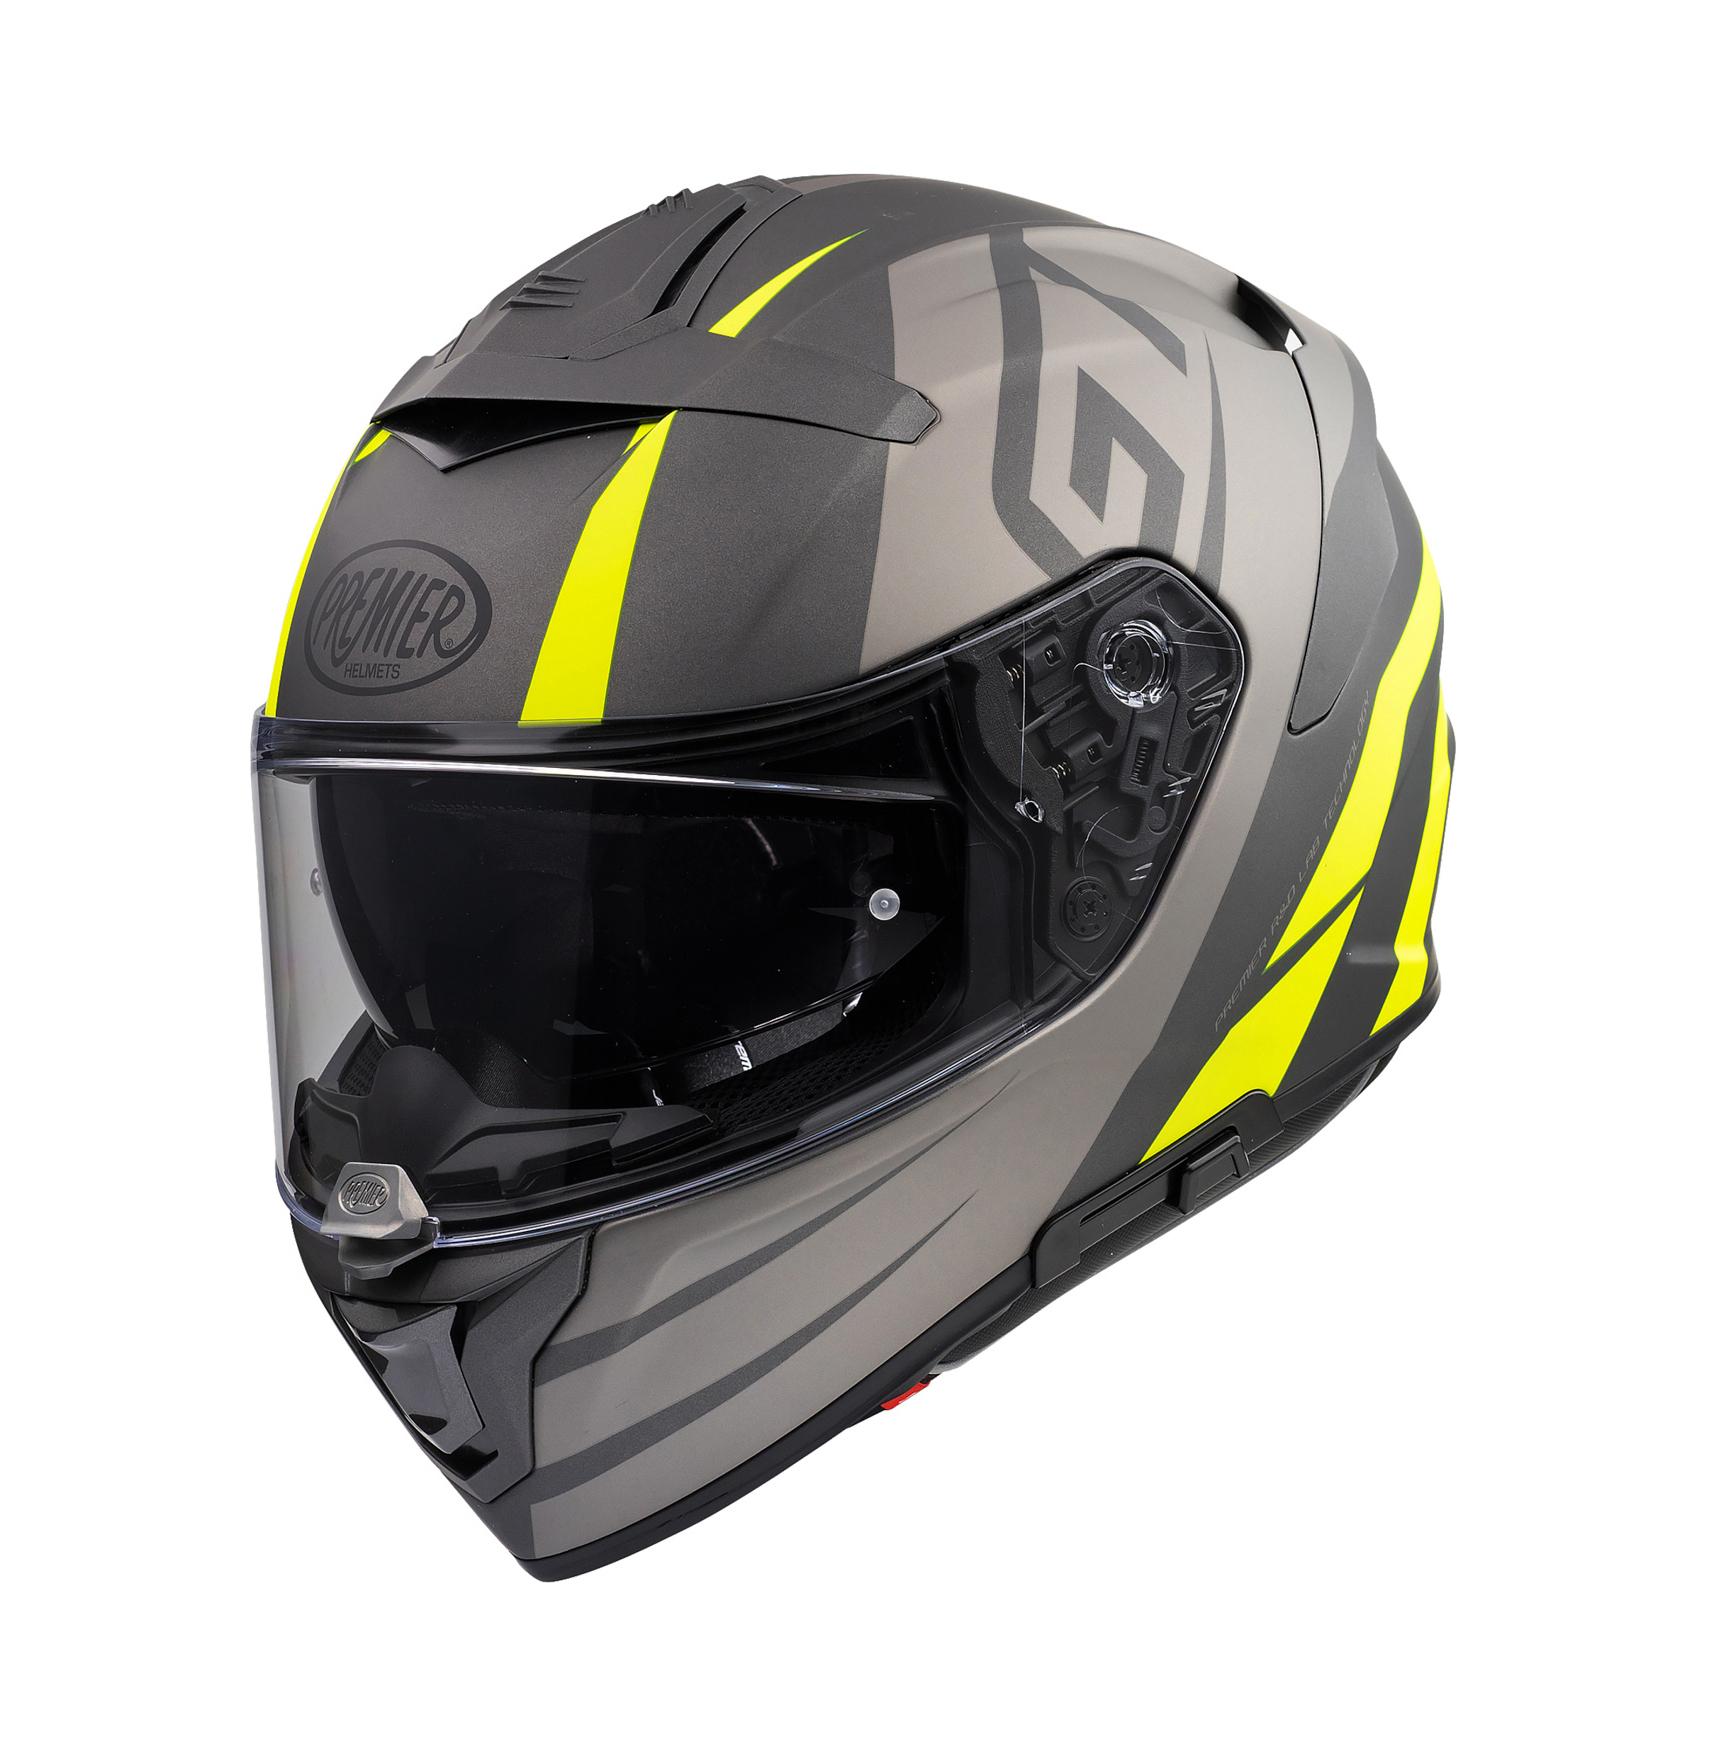 Premier Devil Gt Full Face Motorcycle Helmet - Black/Neon, L